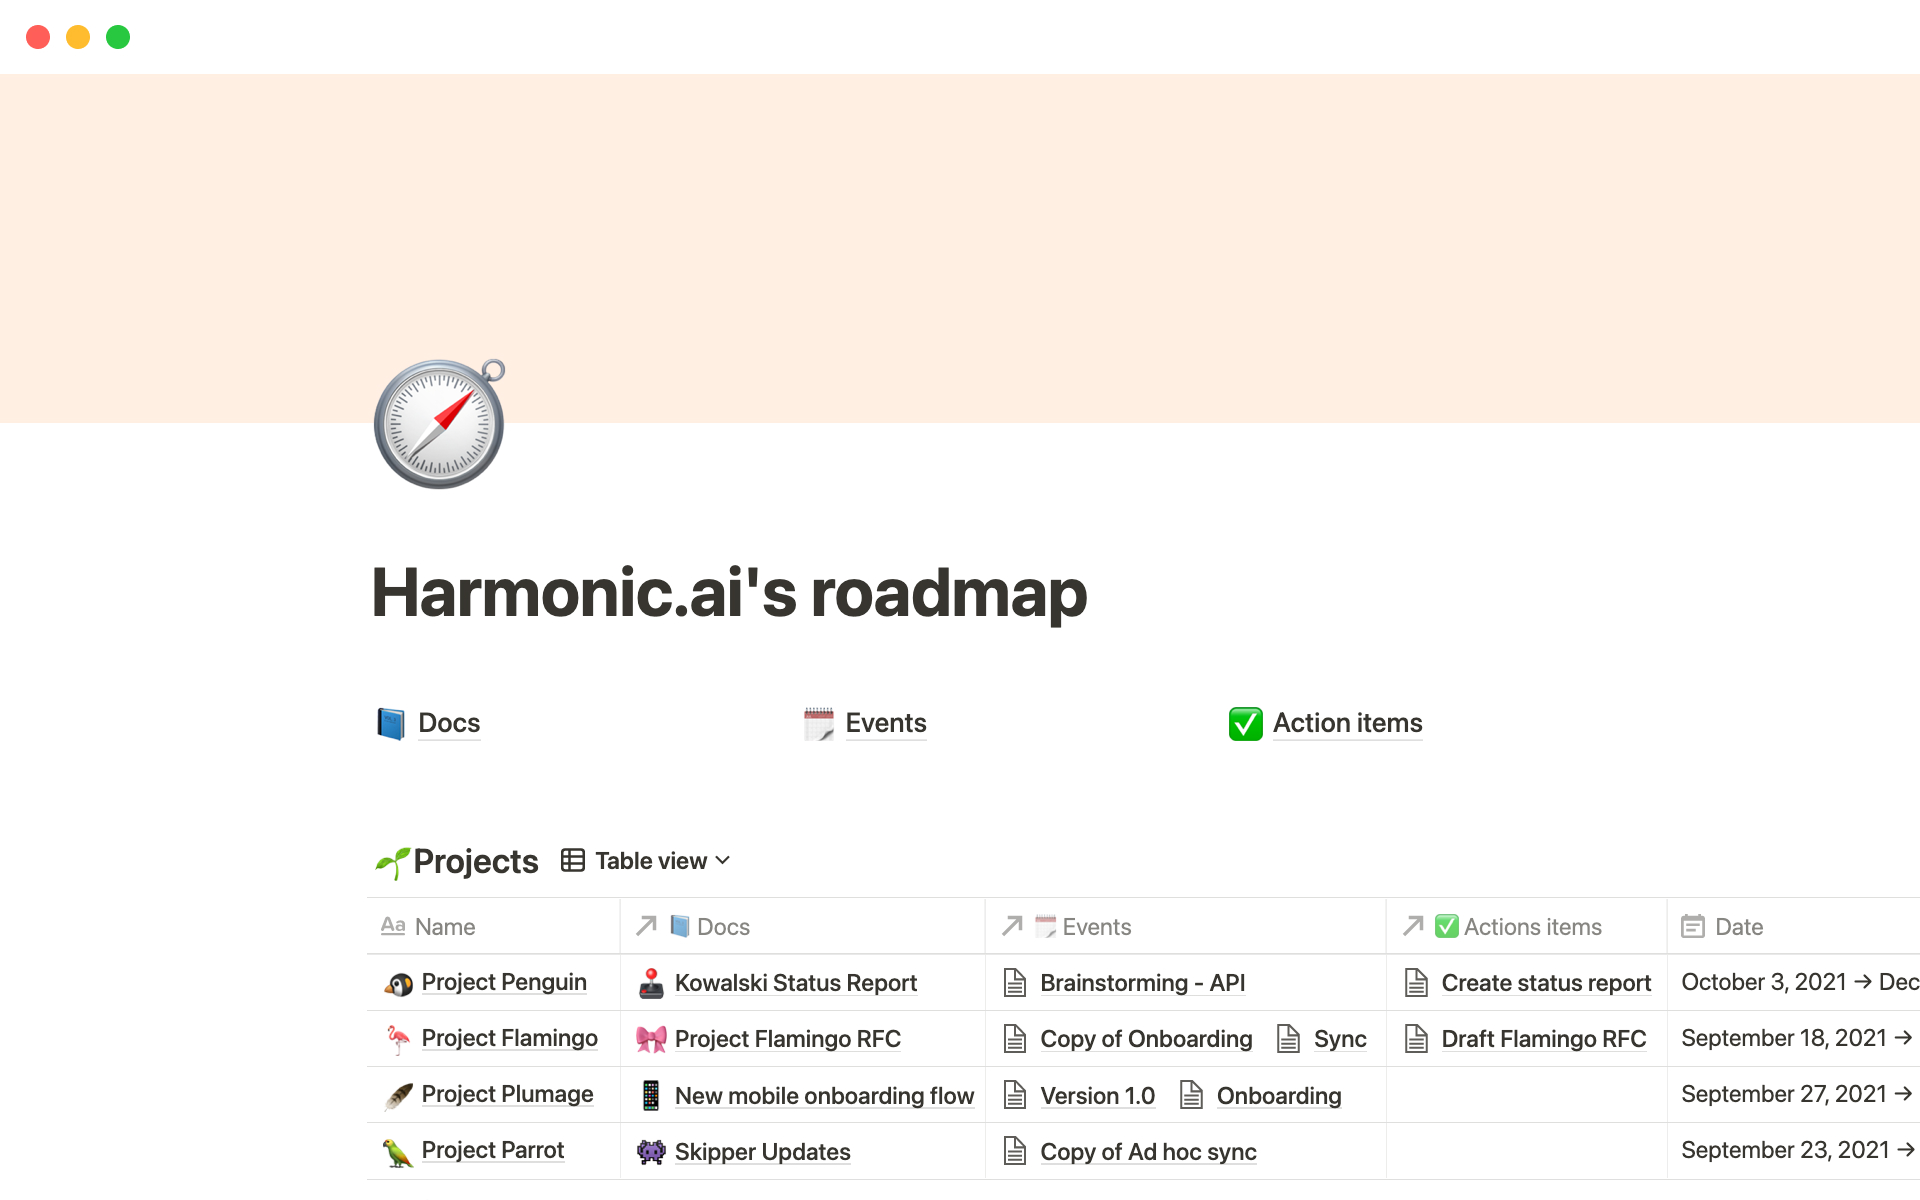 The desktop image for the Harmonic.ai's roadmap template